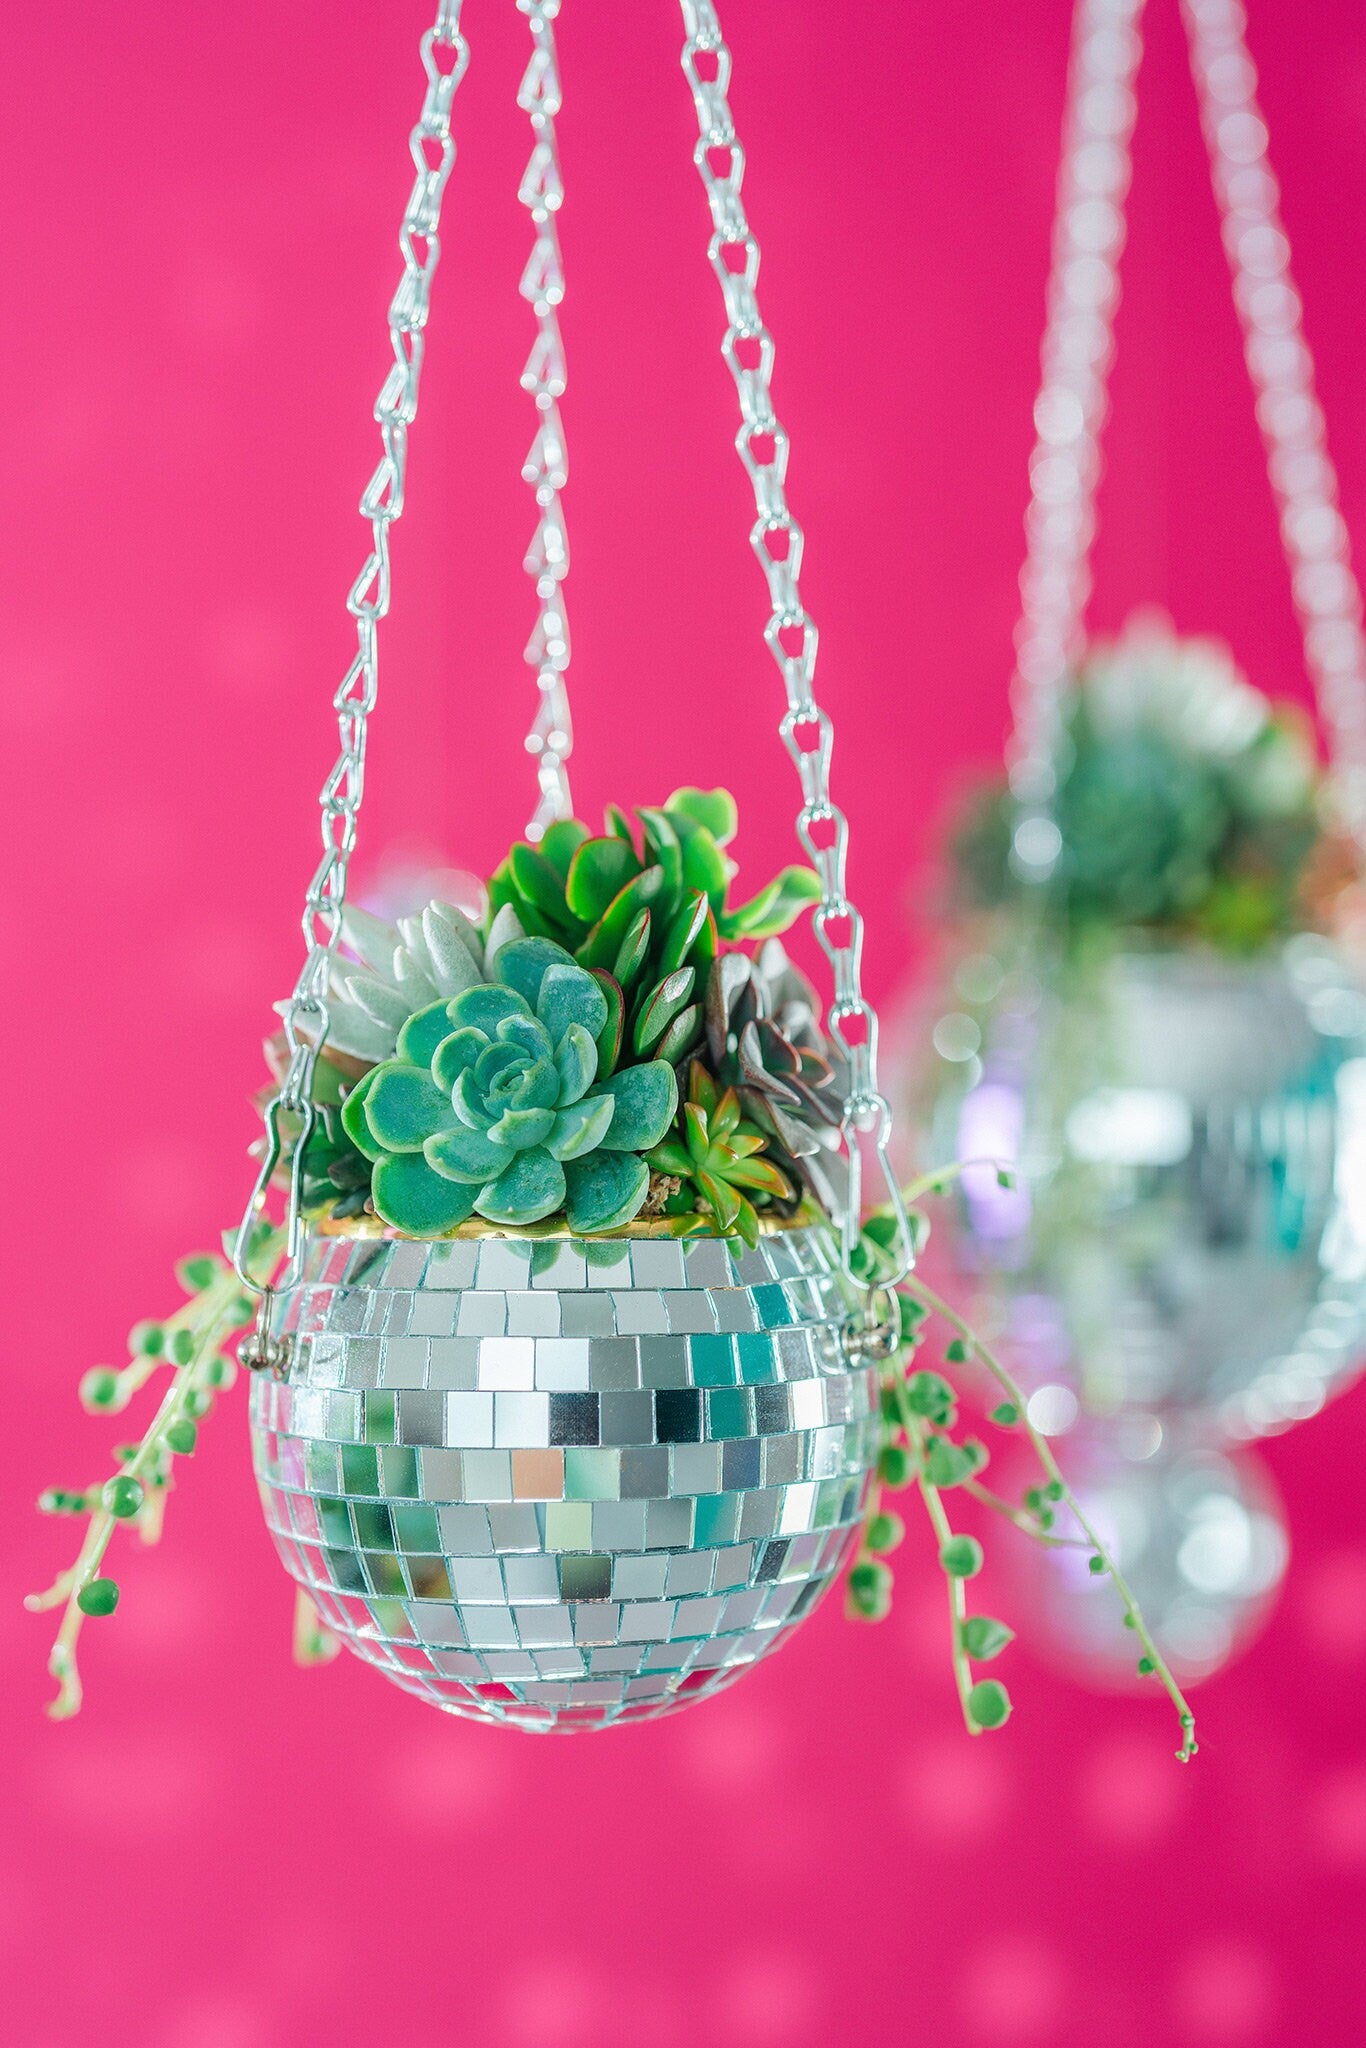 Mini Disco Ball Succulent Arrangement Planter- Hang or Tabletop Decor. Festive, Retro Living Succulent Gift or Centerpiece for Events